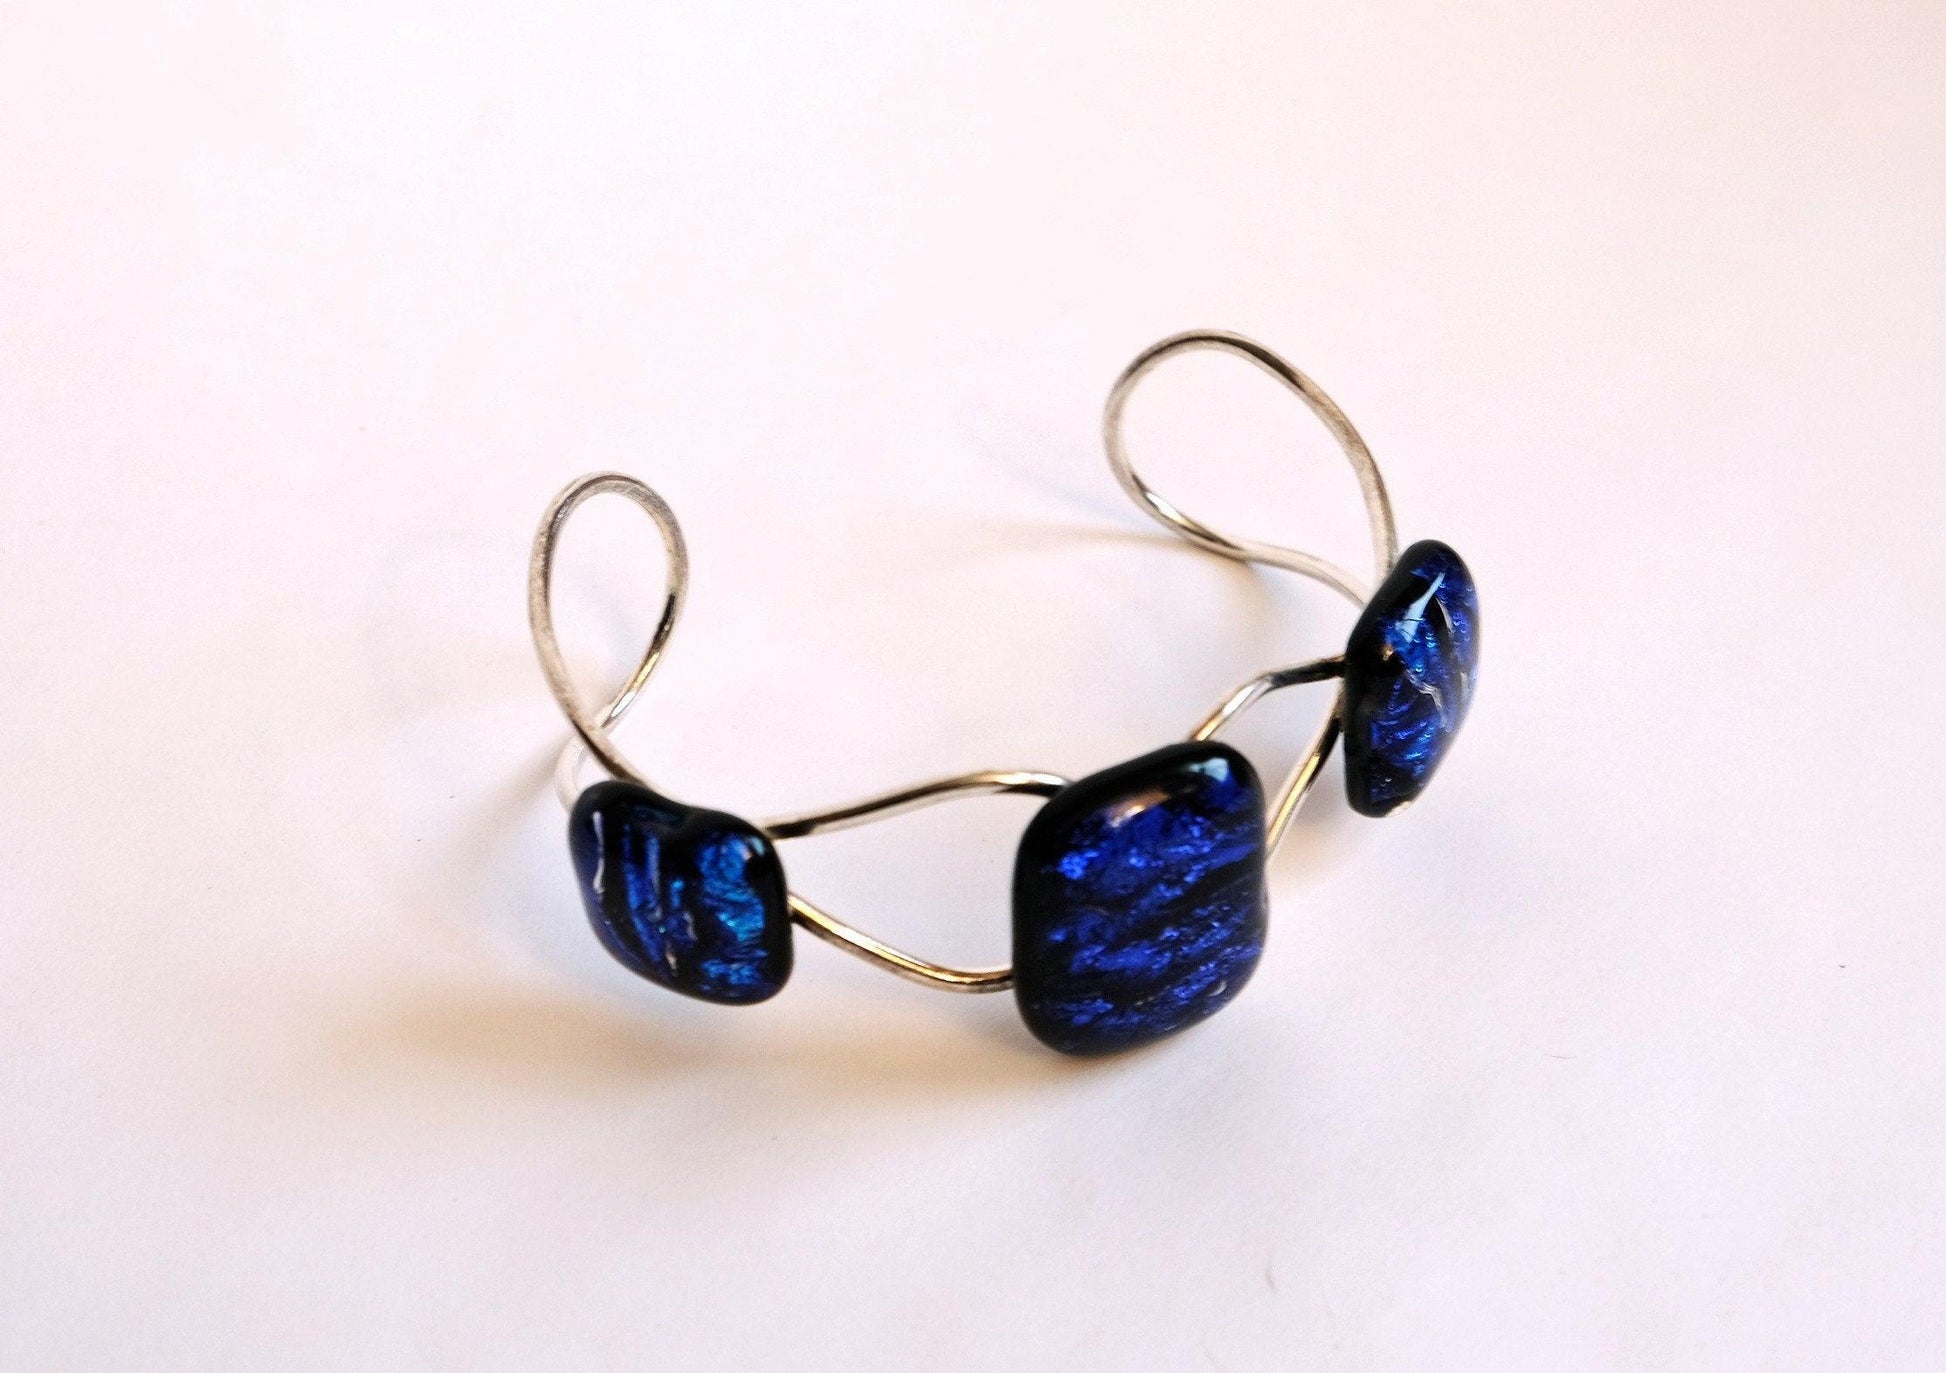 Adjustable cuff Bracelet, silver tone with 3 Dichroic Blue wave fused glass cabochons seeds glassworks seedsglassworks